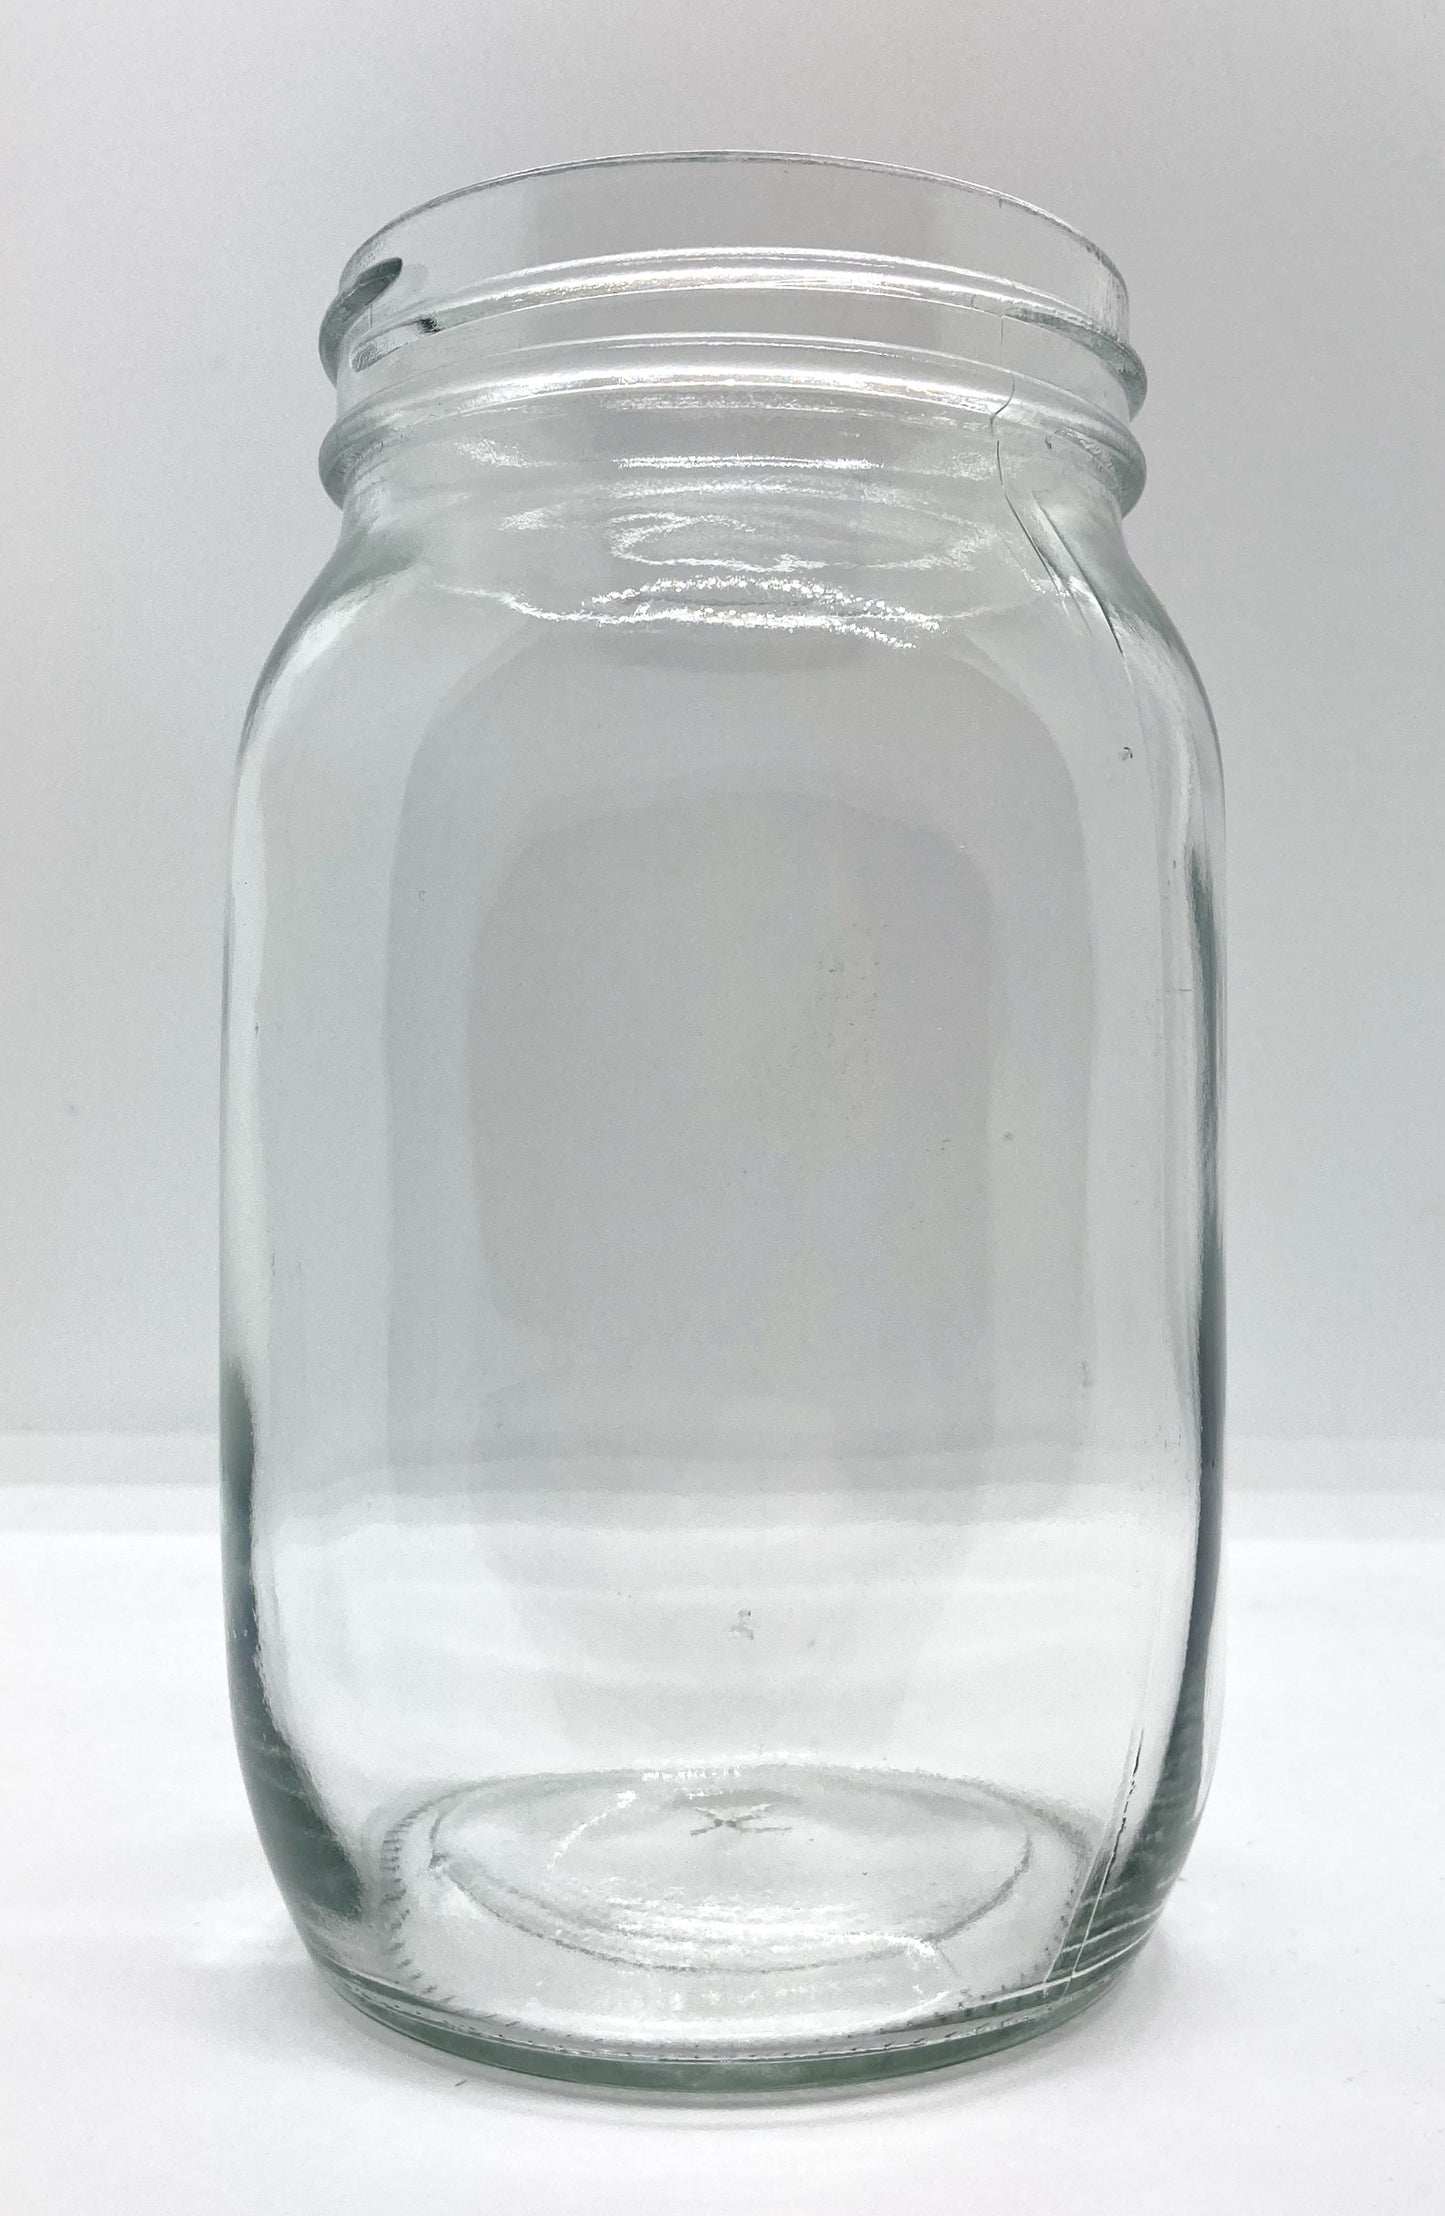 1060mL. Mason glass jar (square) and Lid